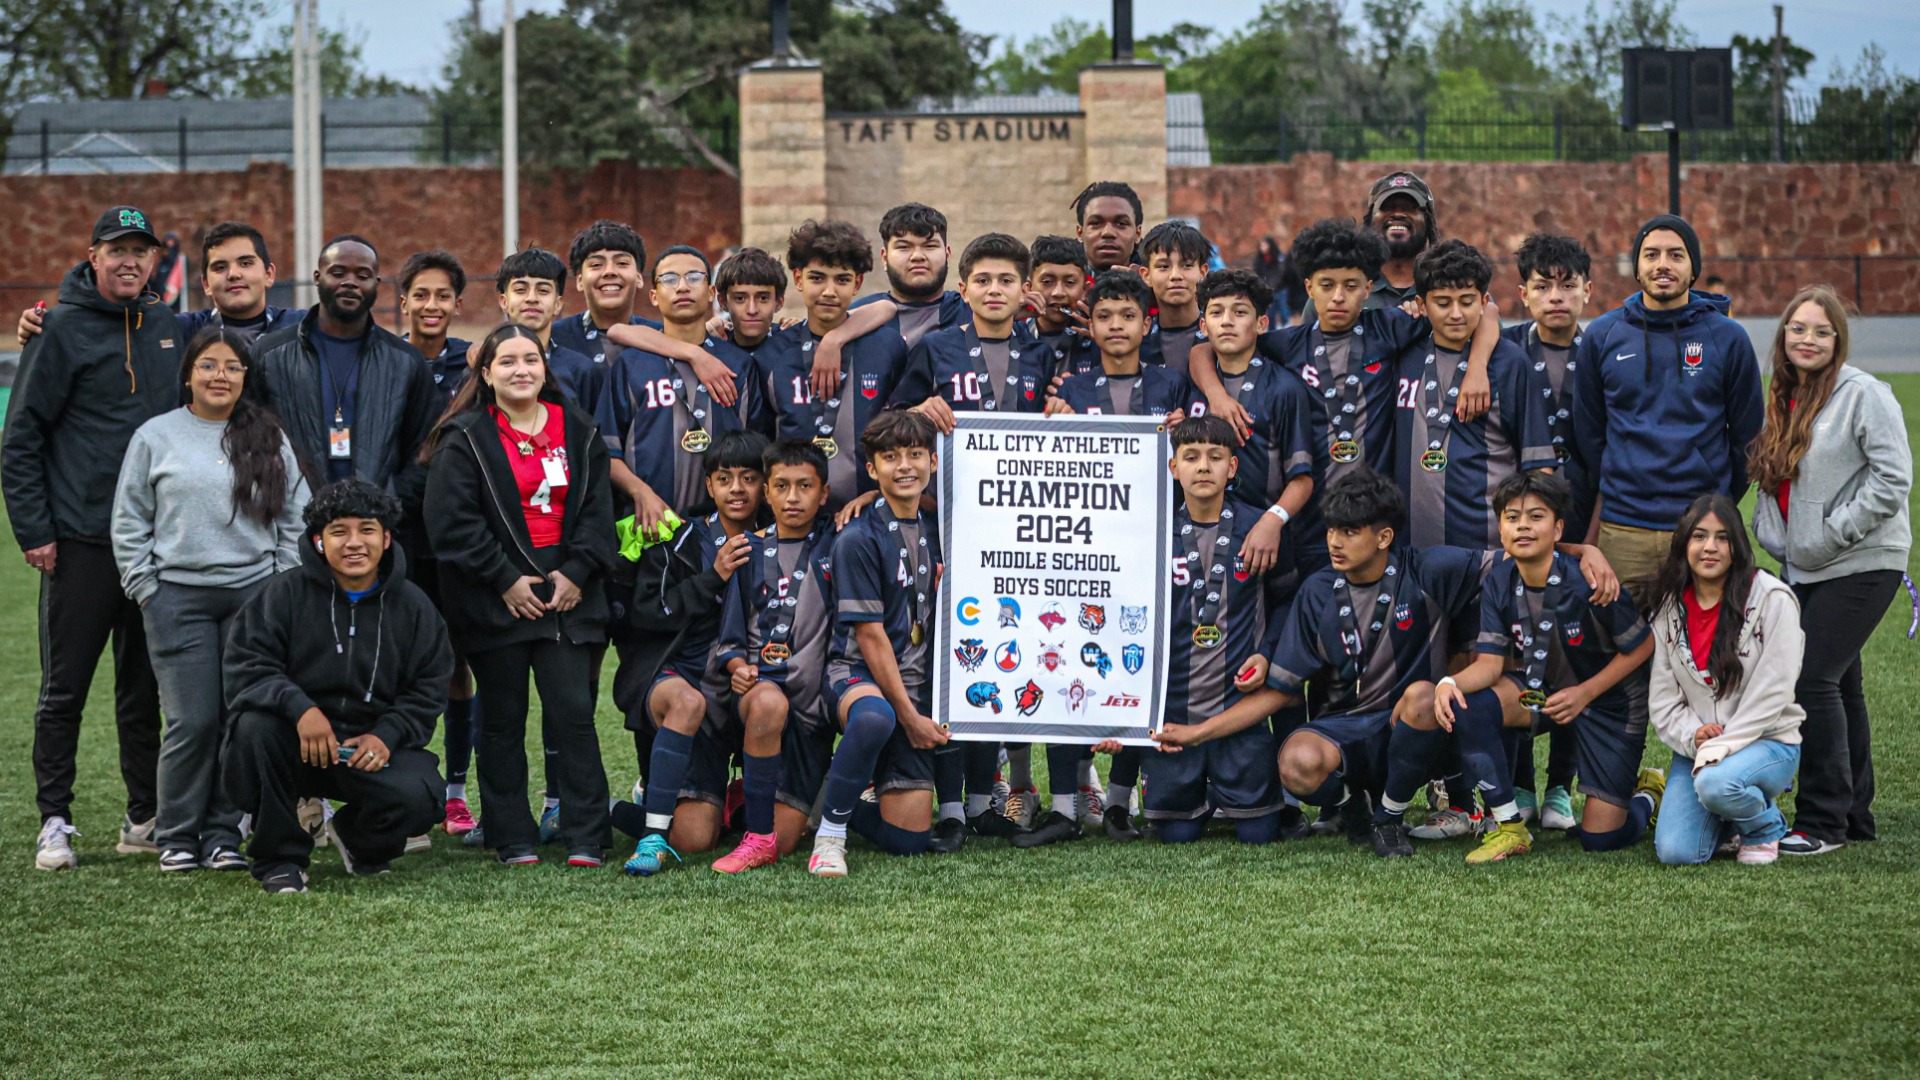 Slide 7 - Taft Middle School Wins 2024 ACAC Boys Soccer Championship